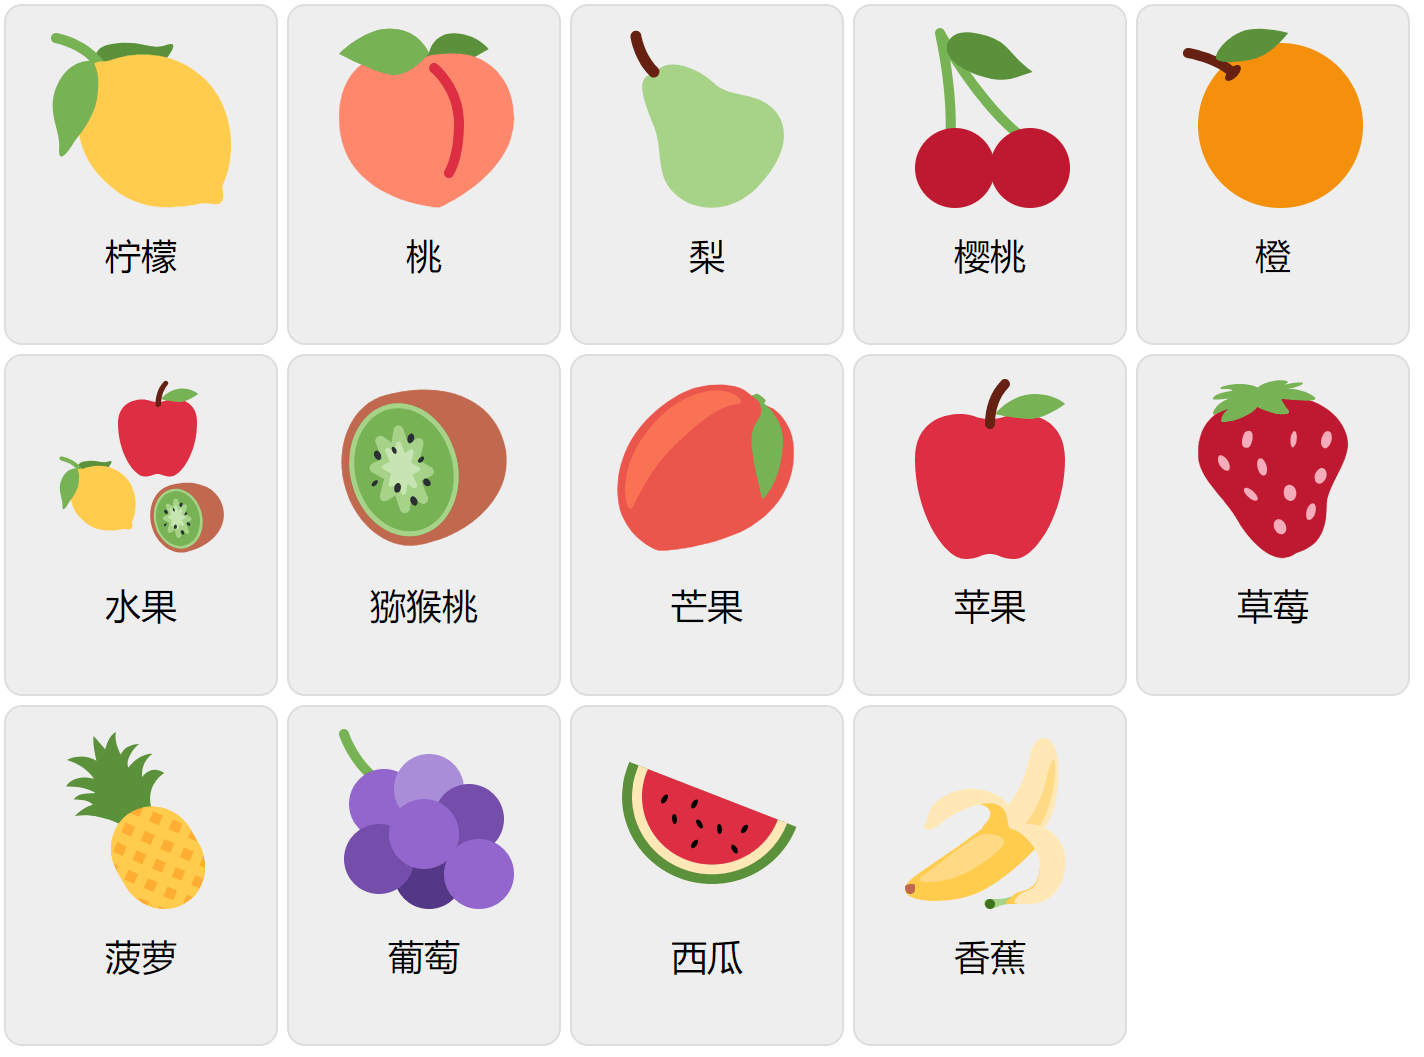 Frukter på kinesiska